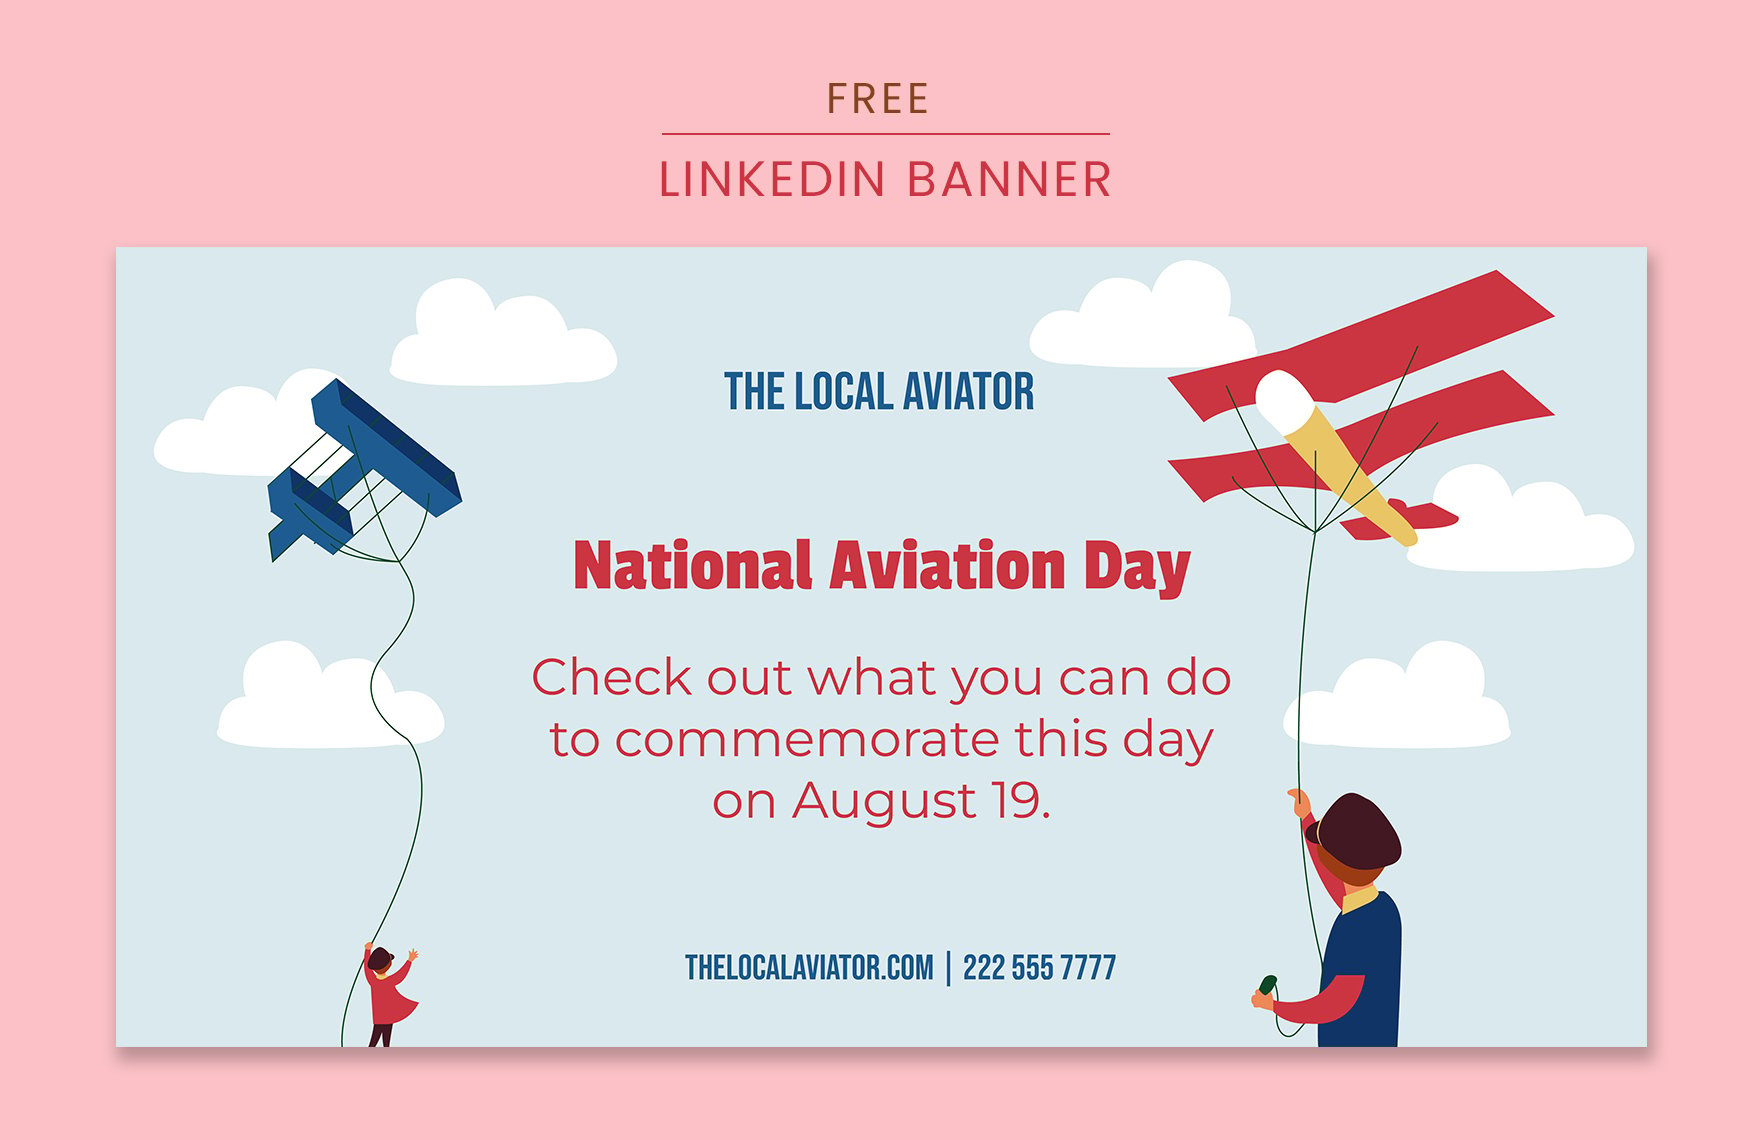 Free National Aviation Day LinkedIn Banner Template in PDF, Illustrator, SVG, JPEG